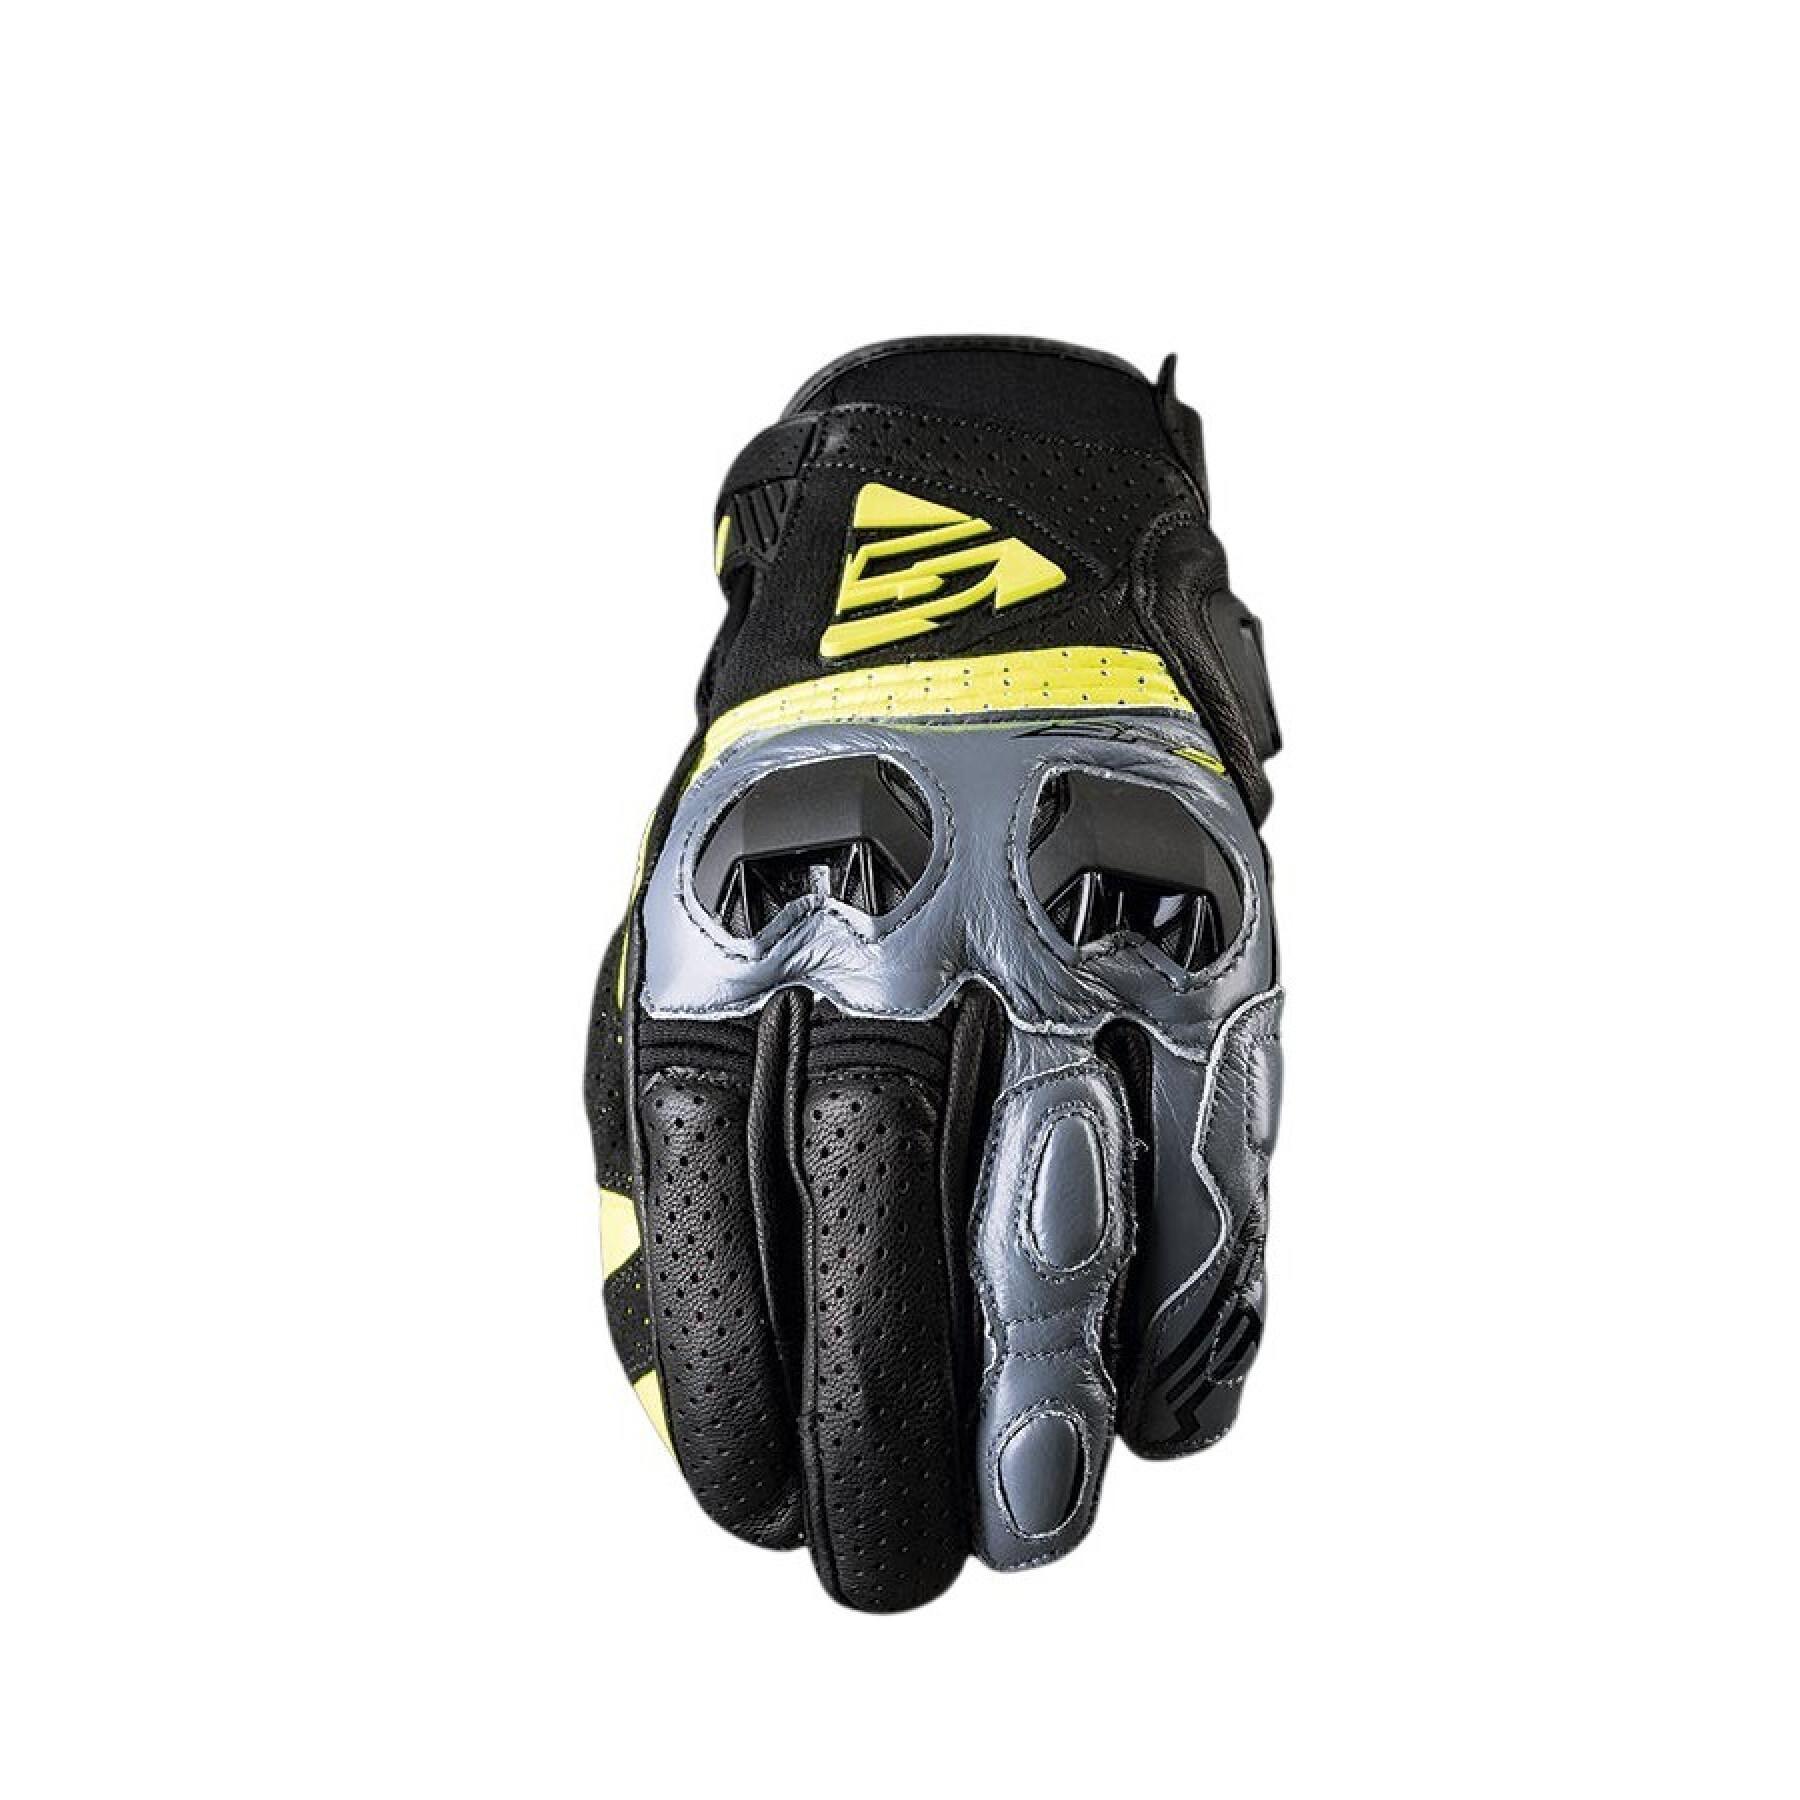 Mid-season motorcycle gloves Five SF2